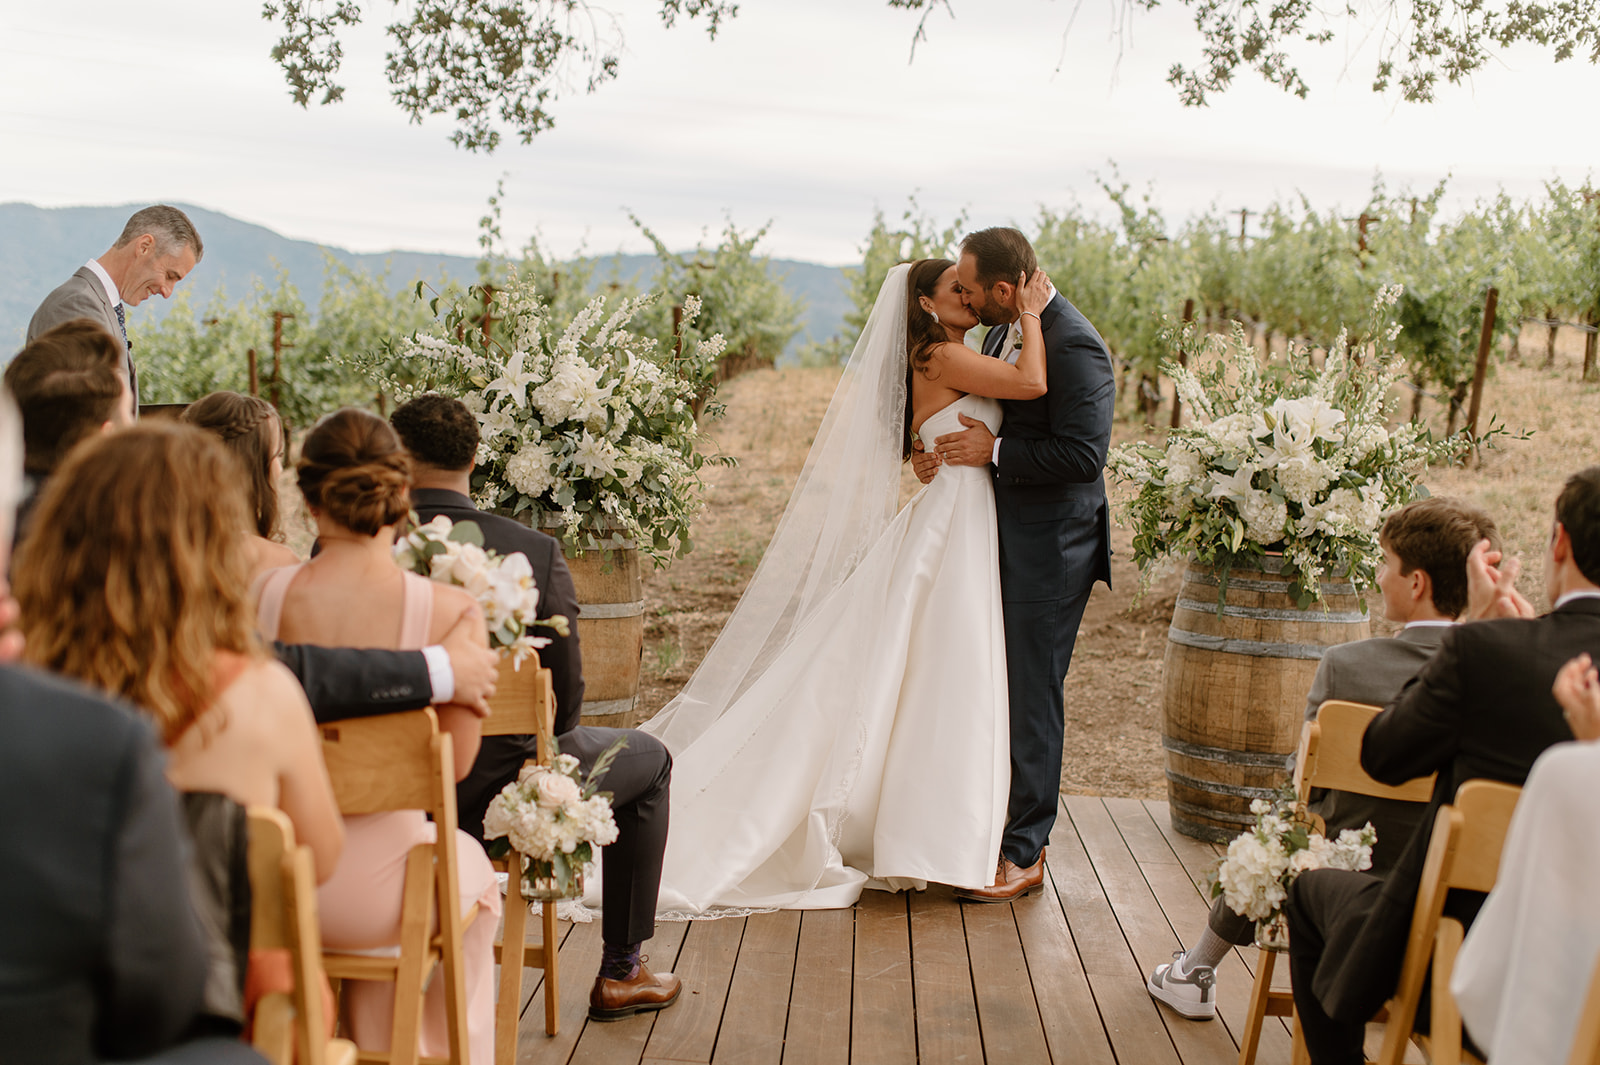 Sydney Jai Photography - Napa Valley Wedding Photographer, wedding ceremony, bride and groom first kiss, bride and groom photos